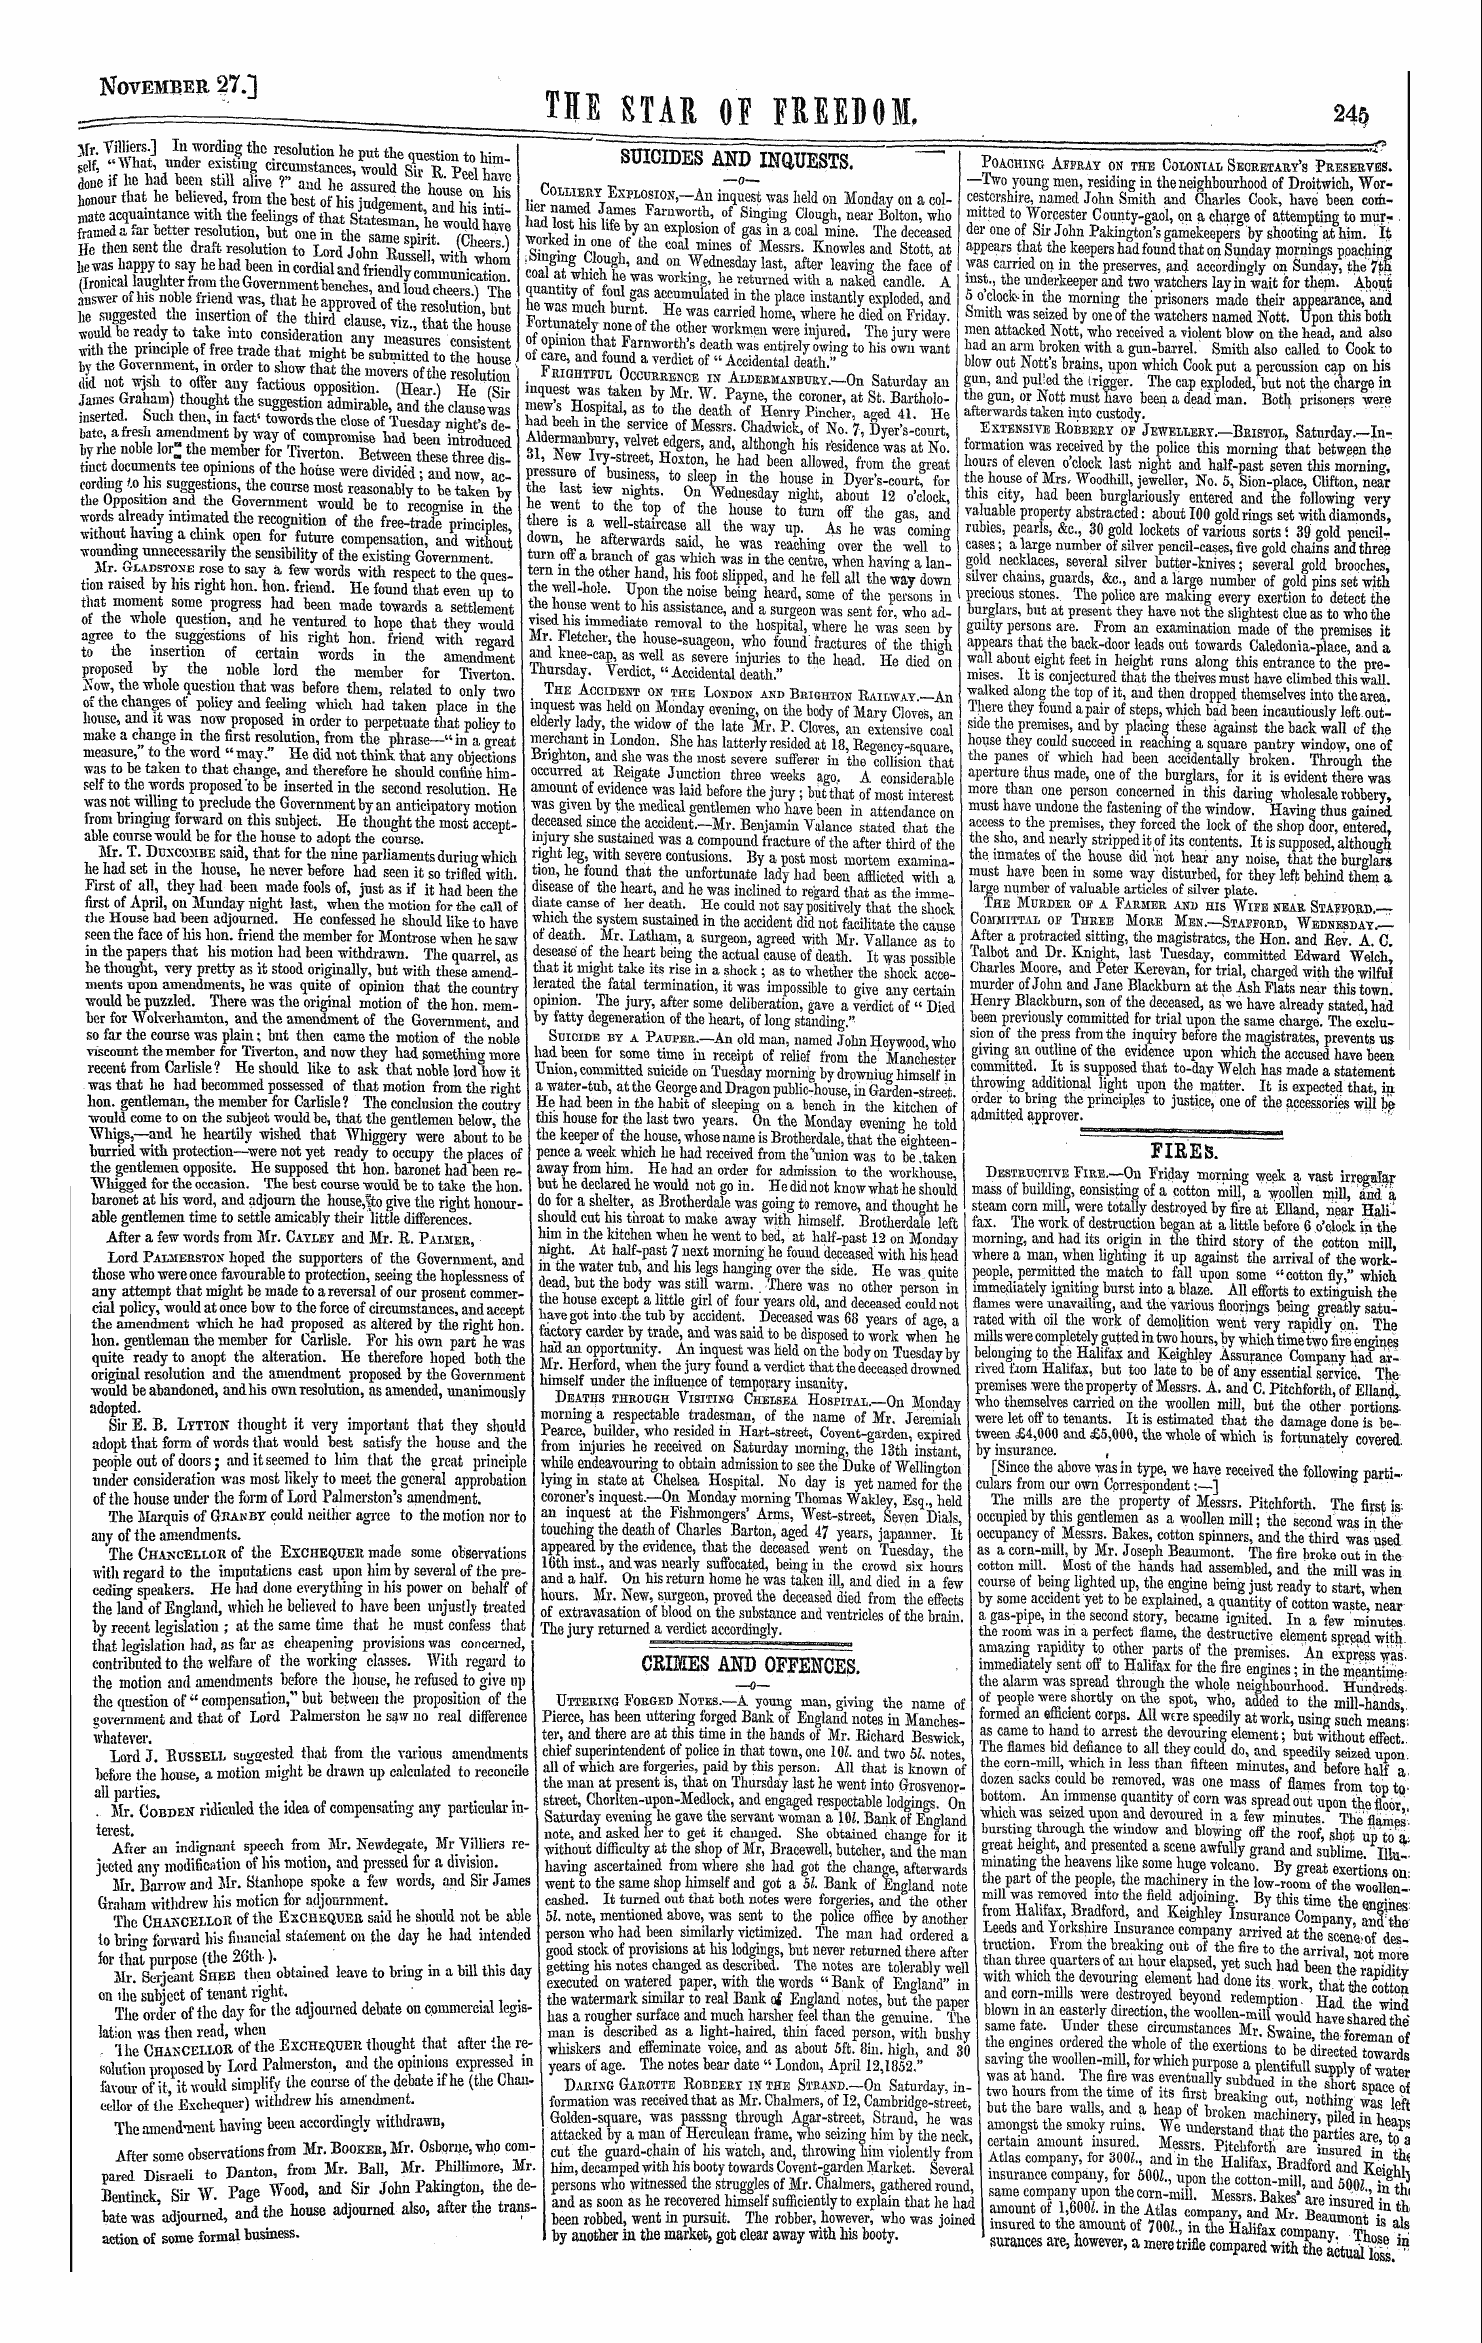 Northern Star (1837-1852): jS F Y, 1st edition - Tilliersj In Tlio